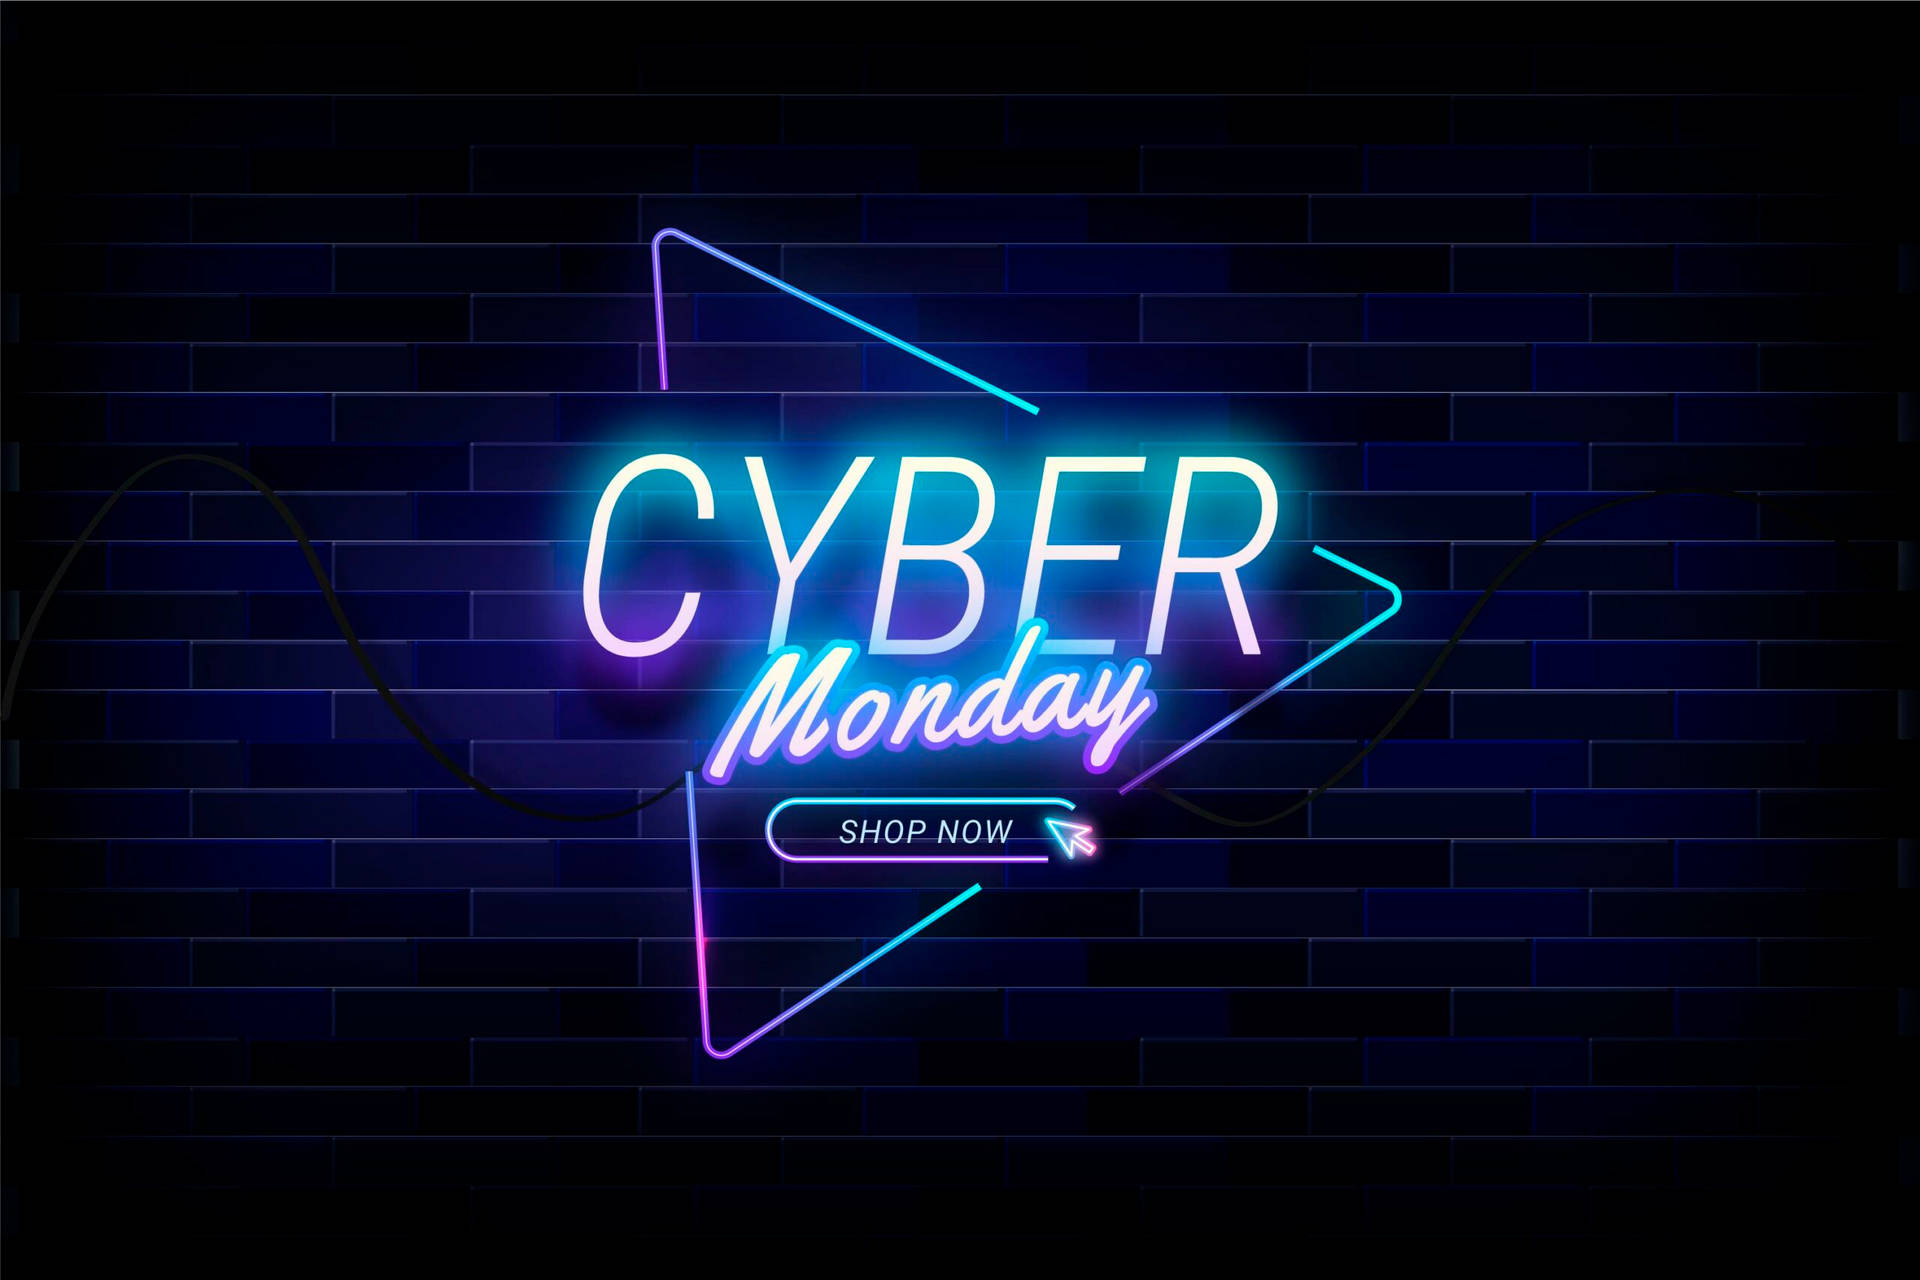 Cyber Monday Shop Now Neon Light